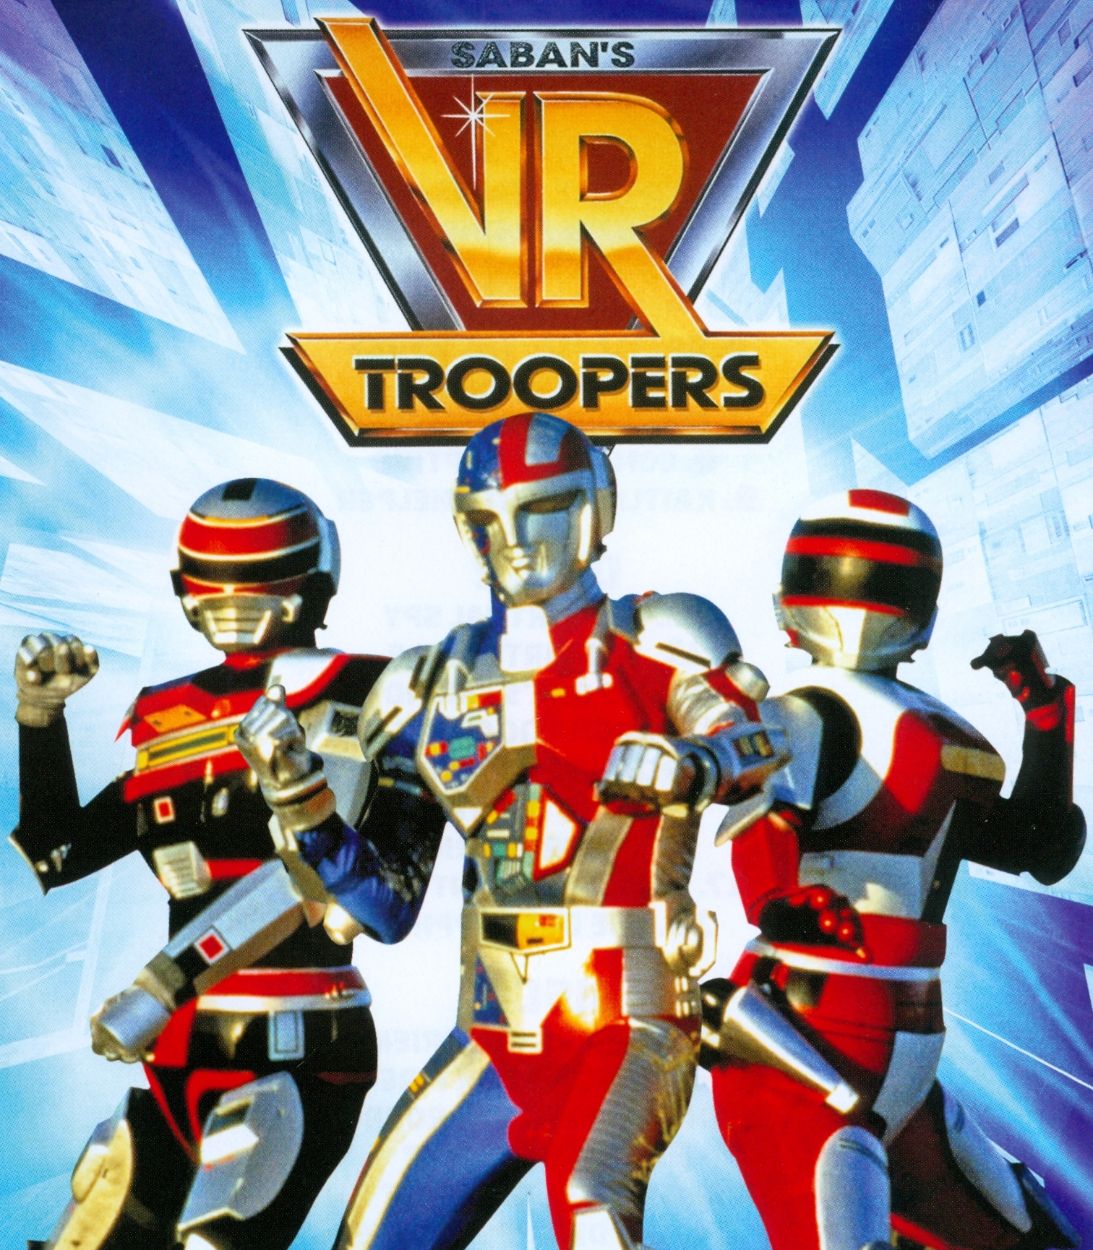 VR troopers TLDR vertical